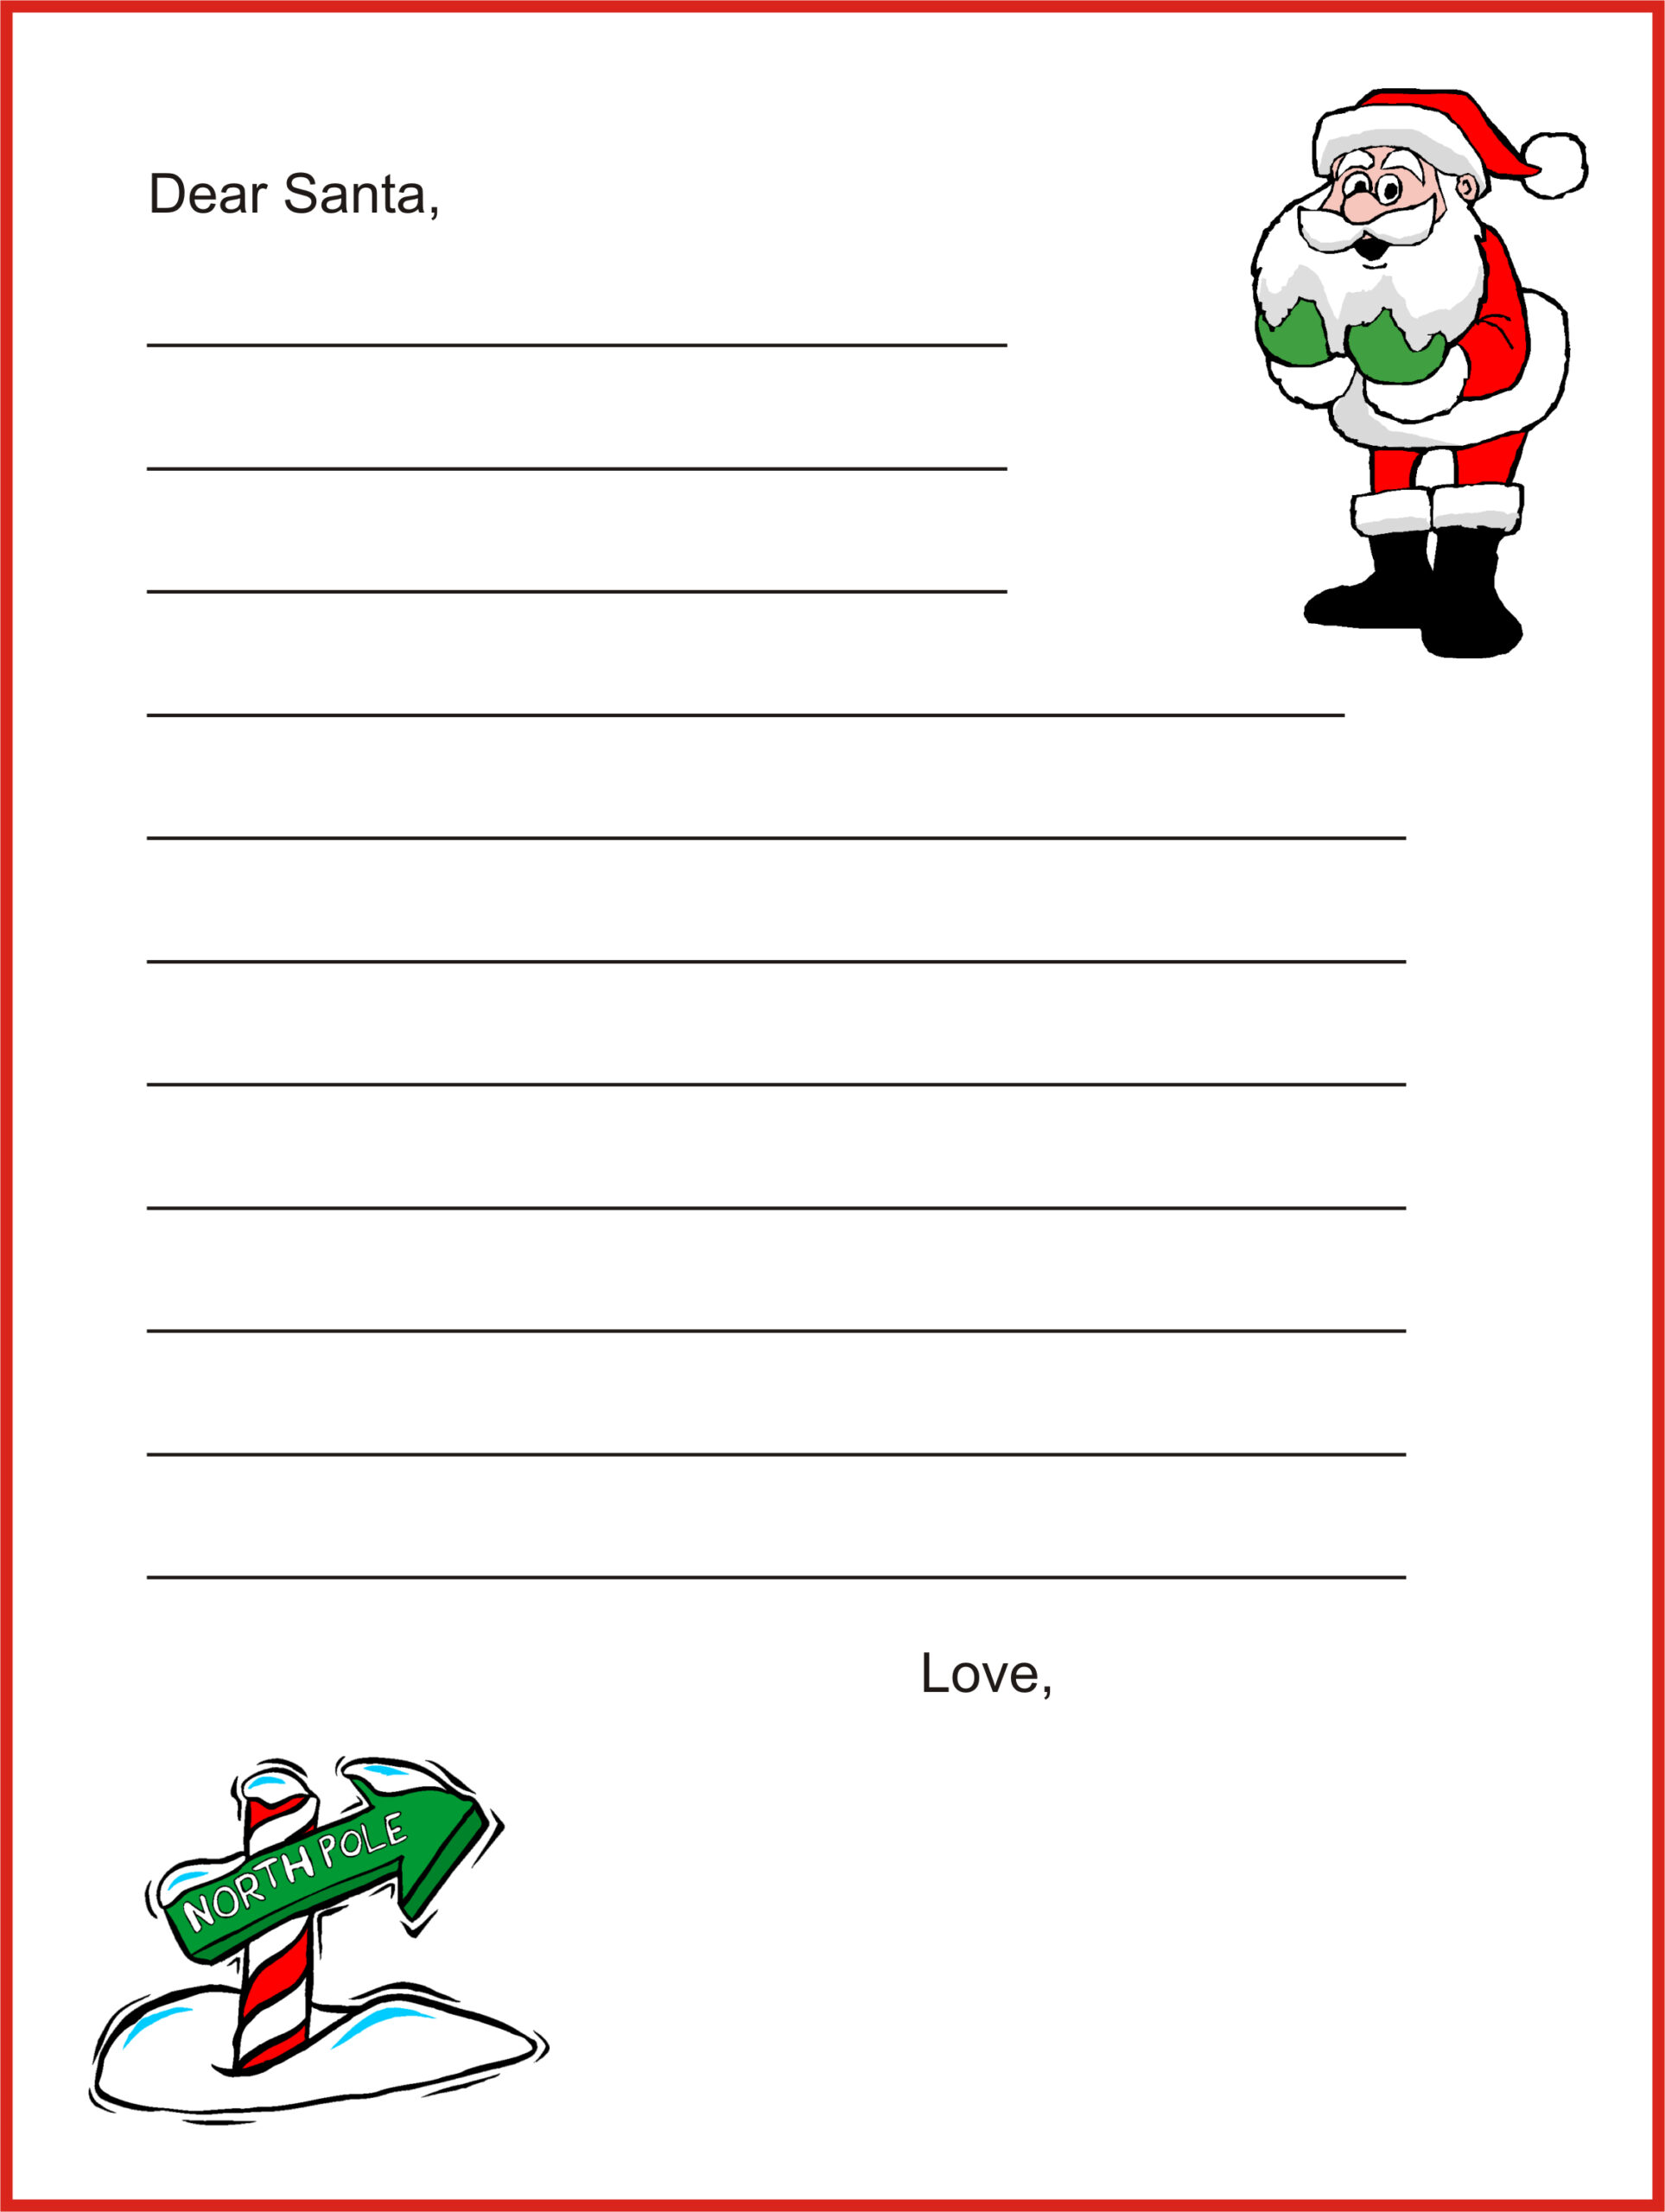 Dear Santa Letter | For Letter From Santa Claus Template